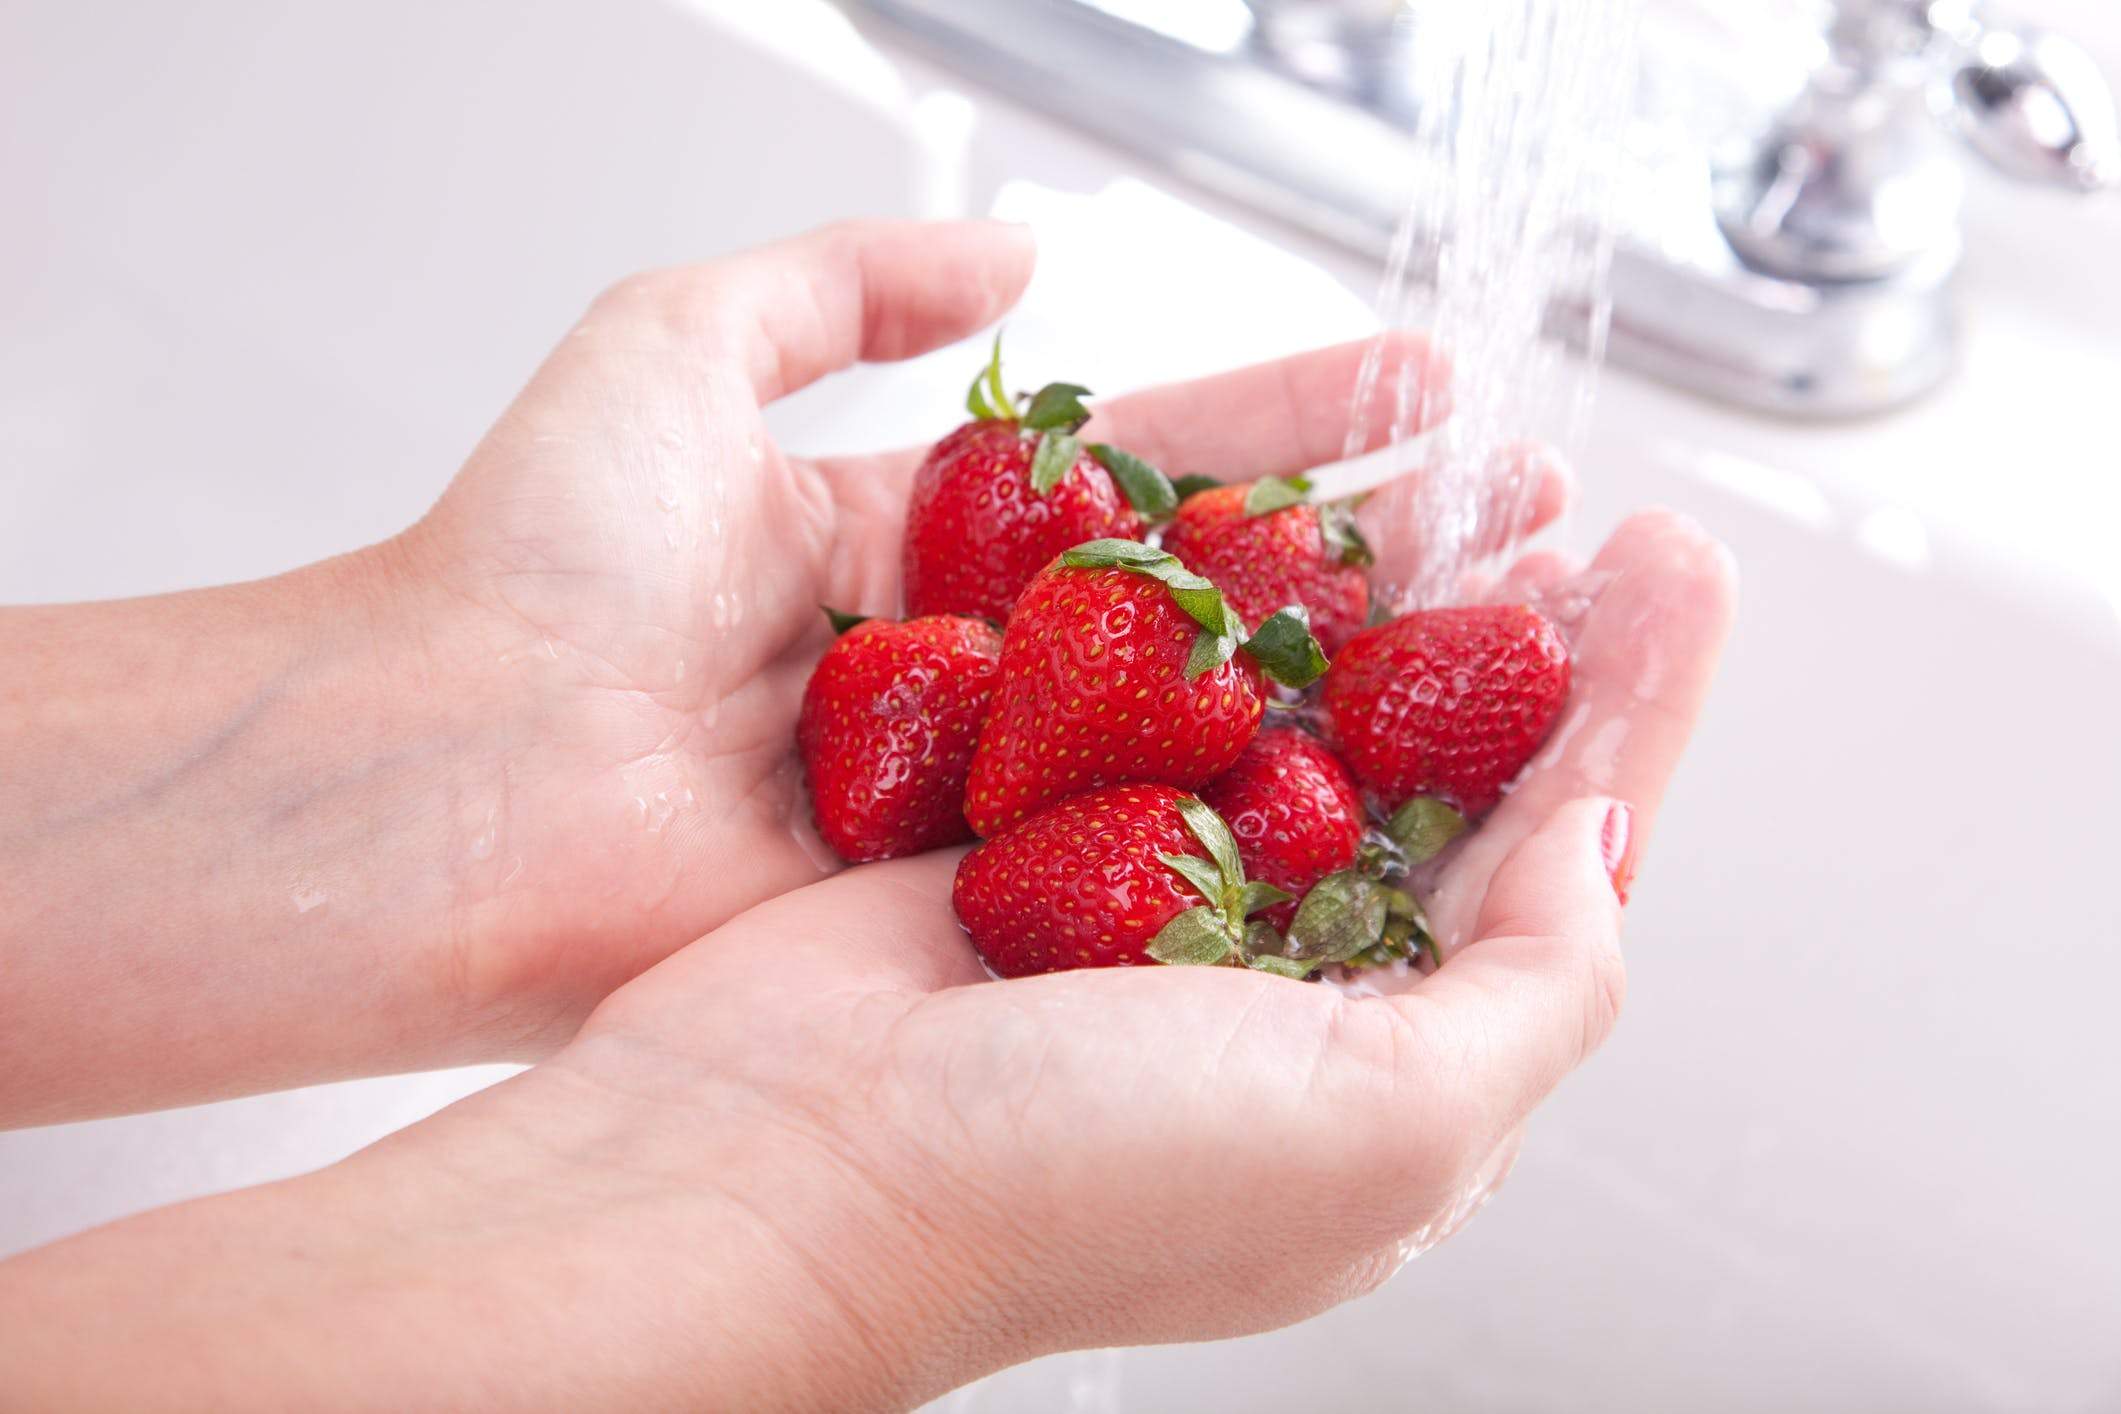 Do You Rinse Fresh Fruits and Veggies?